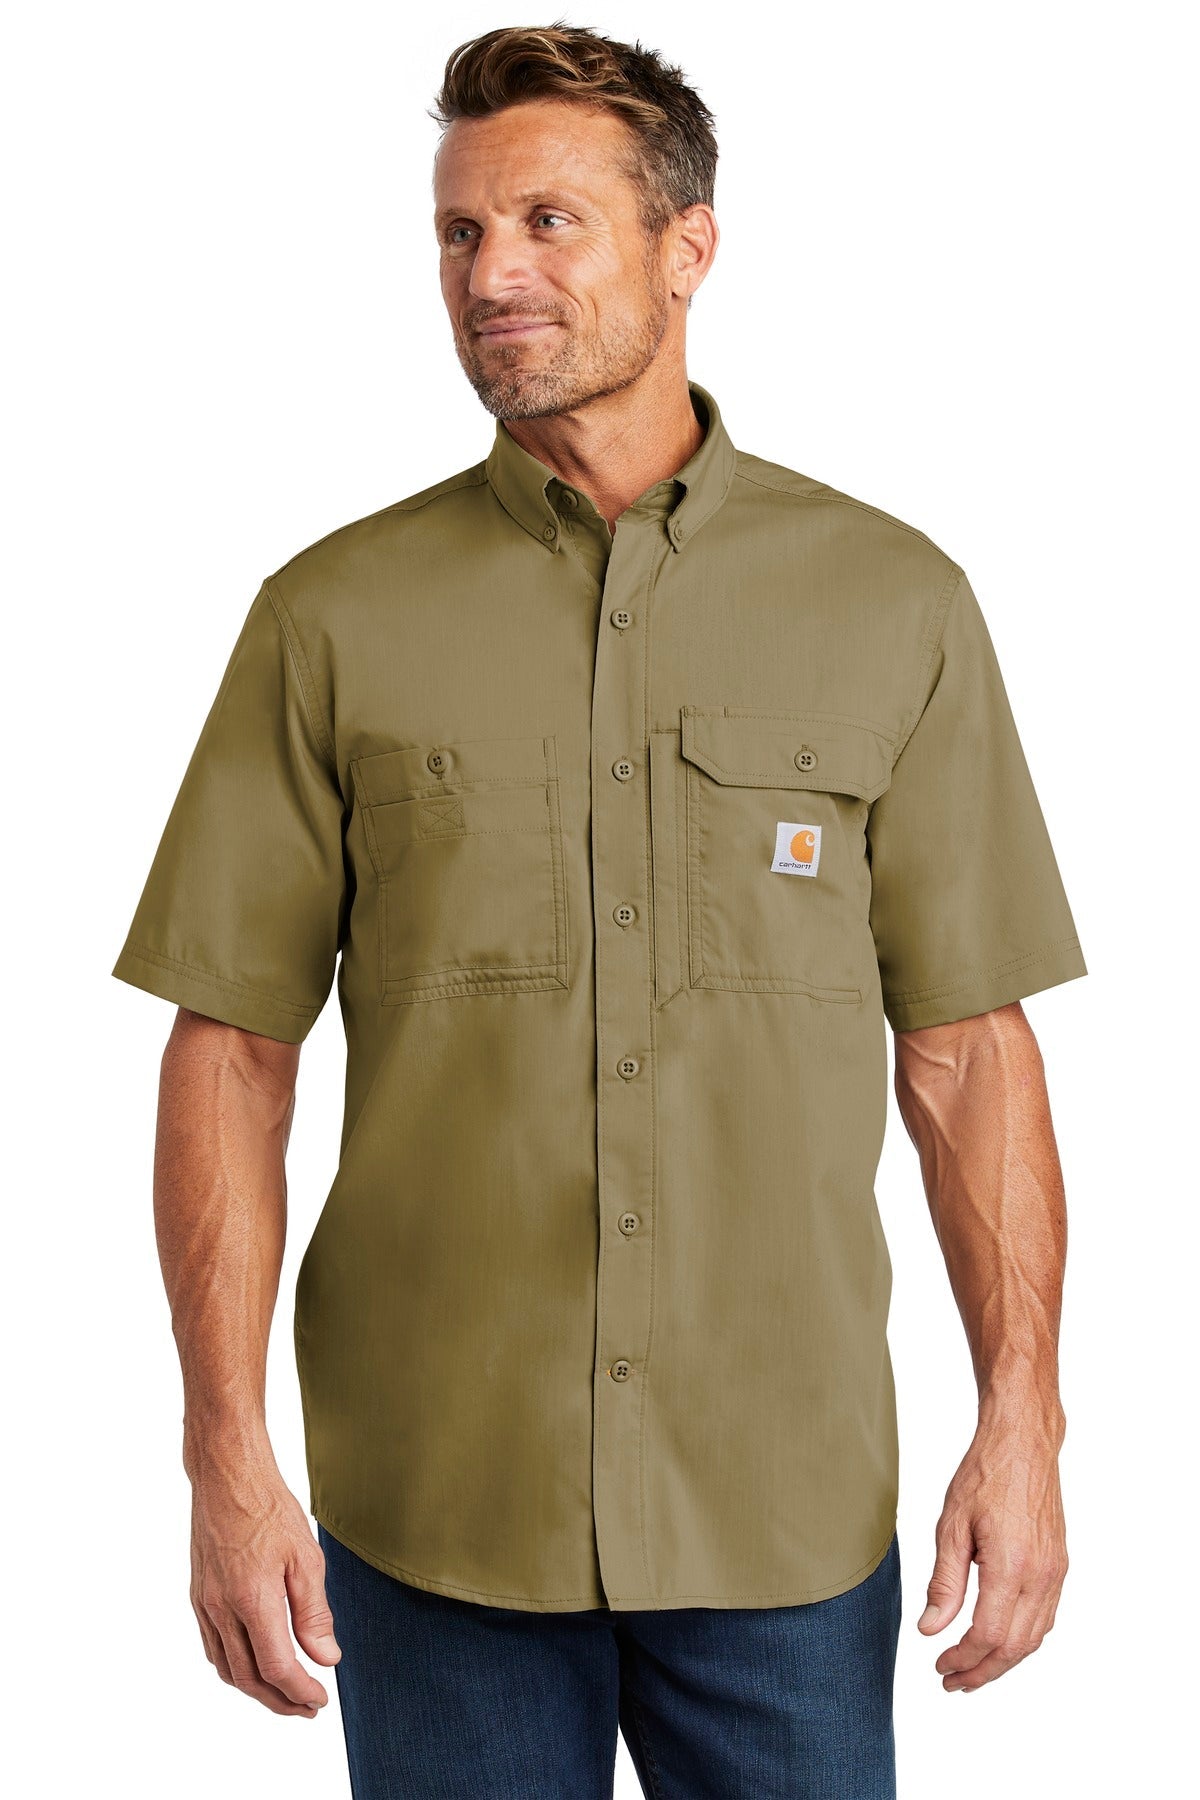 Carhartt Force ® Ridgefield Solid Short Sleeve Shirt. CT102417 - DFW Impression